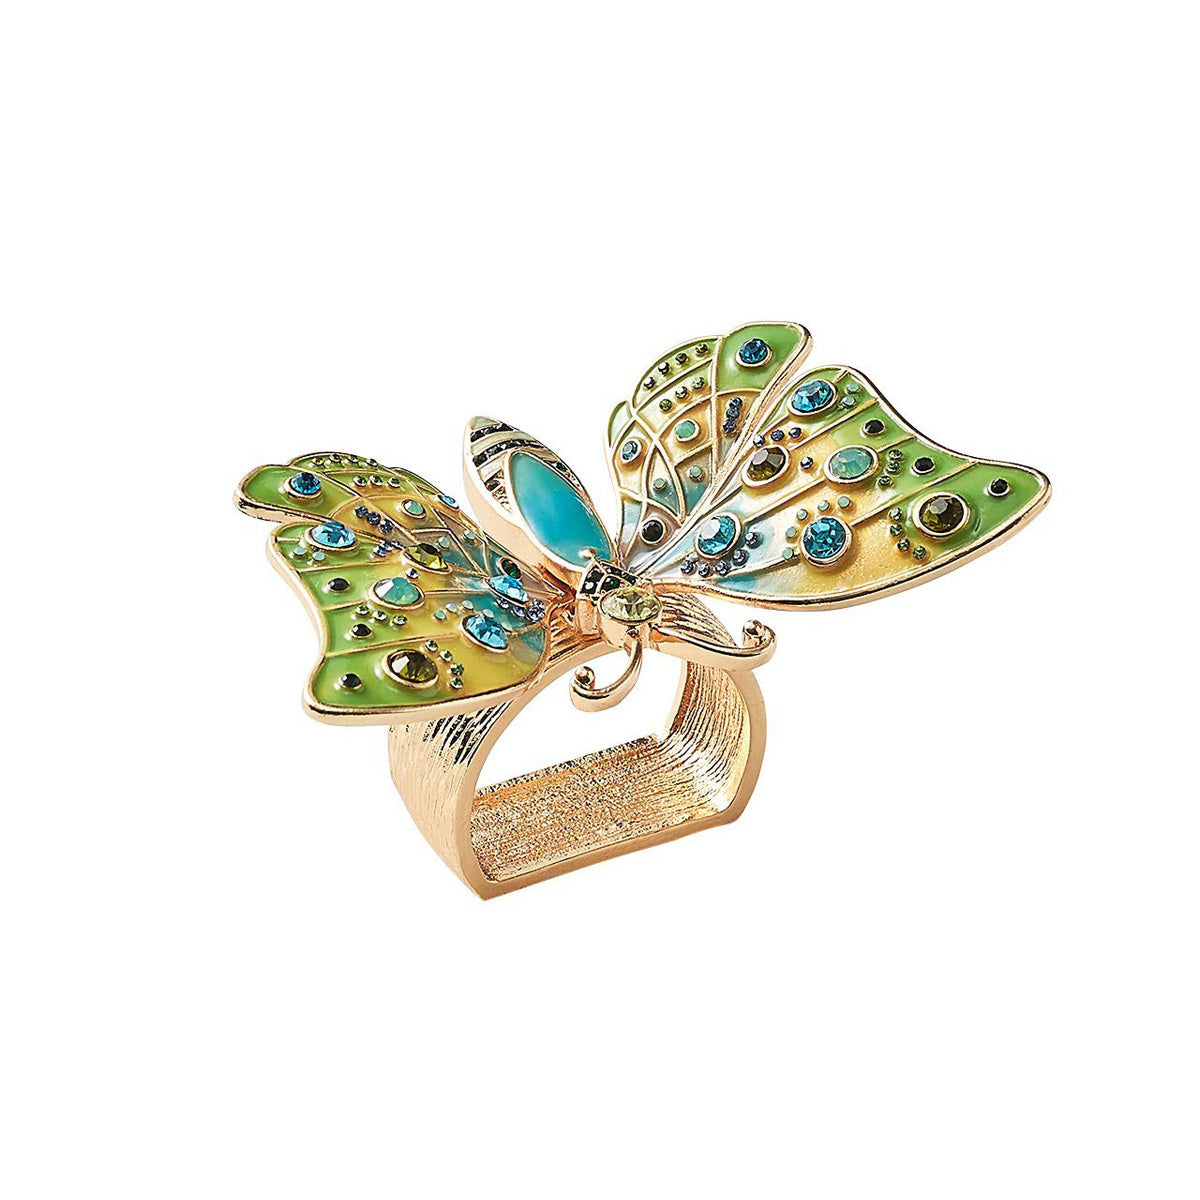 Arbor Napkin Ring in Blue & Green - Set of 4 in a Gift Box by Kim Seybert